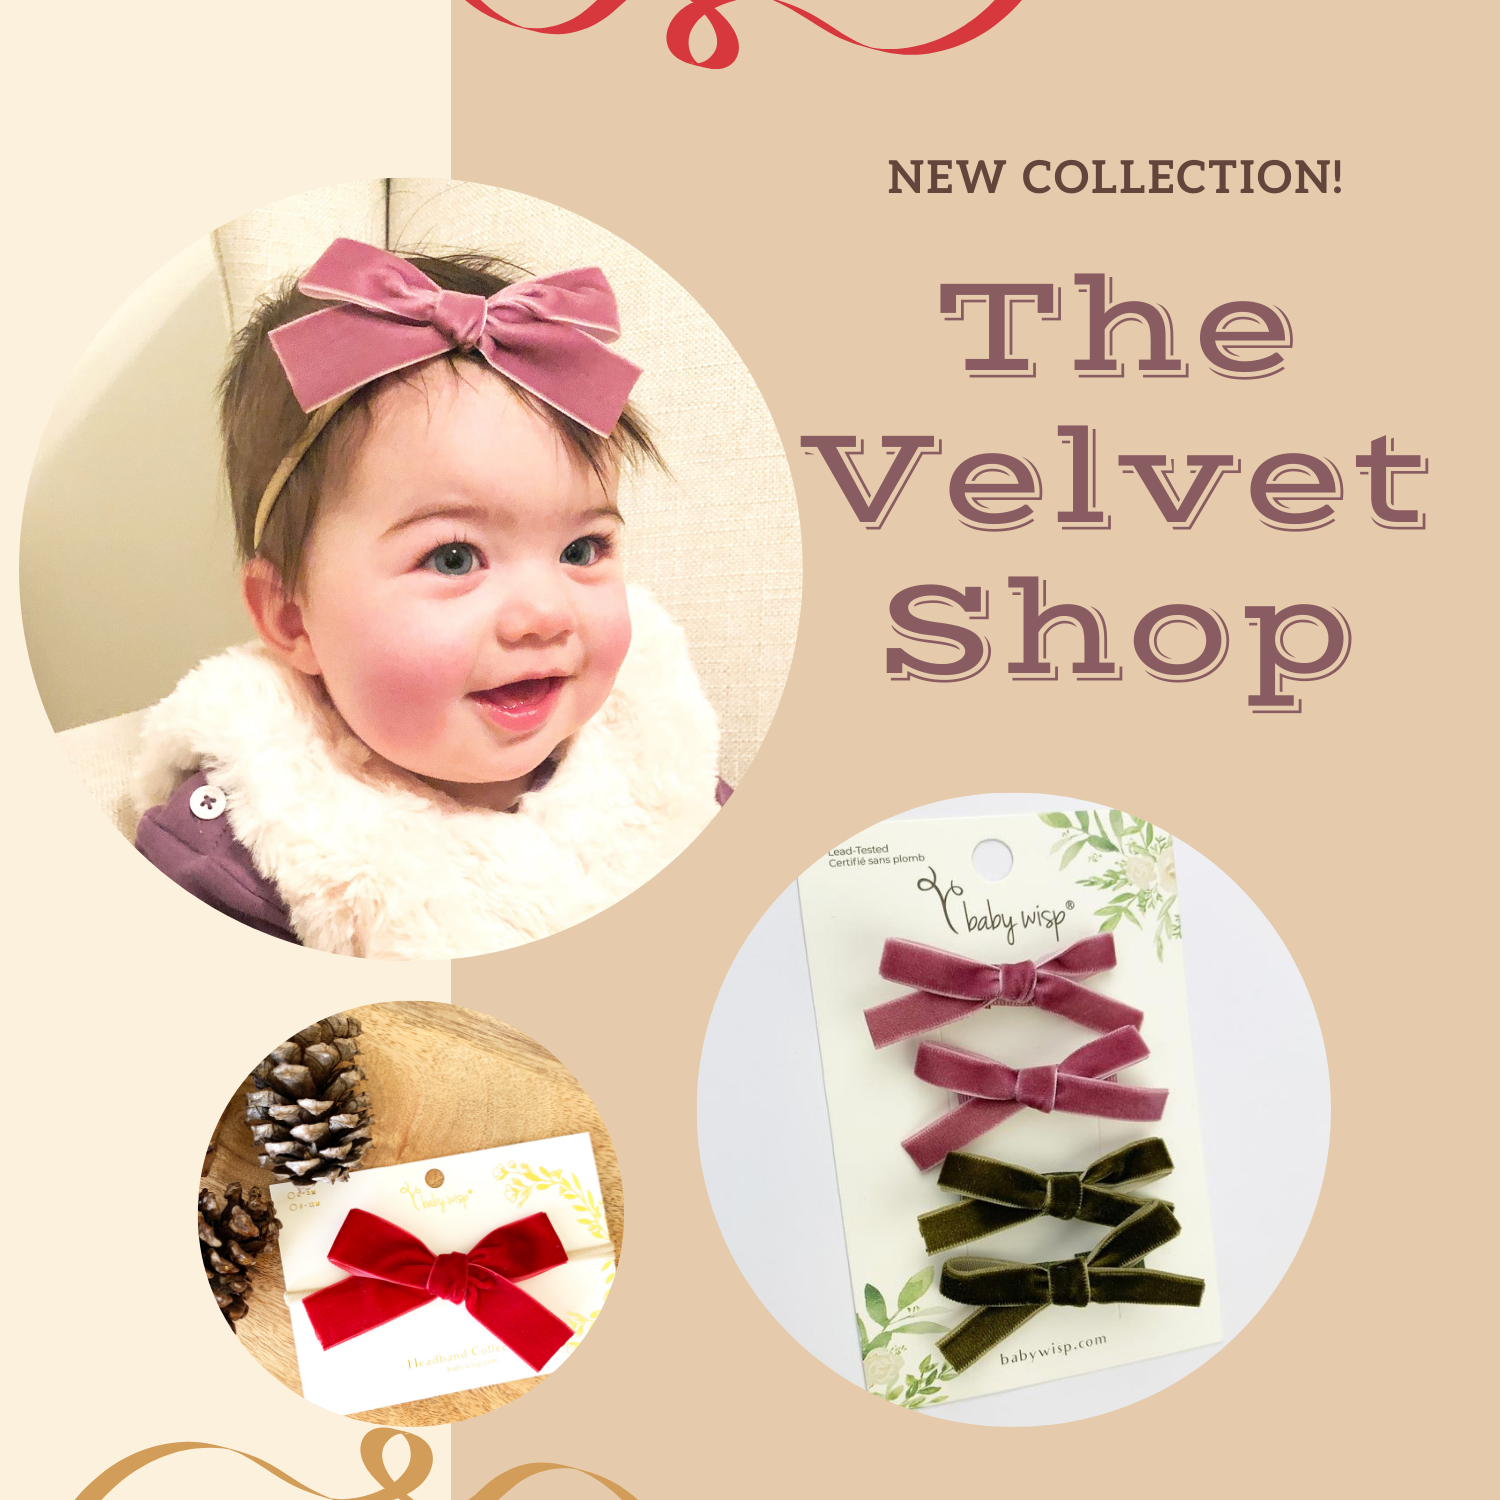 The Velvet Shop is Open! VELVET HAIR ACCESSORIES FOR BABY AND TODDLER